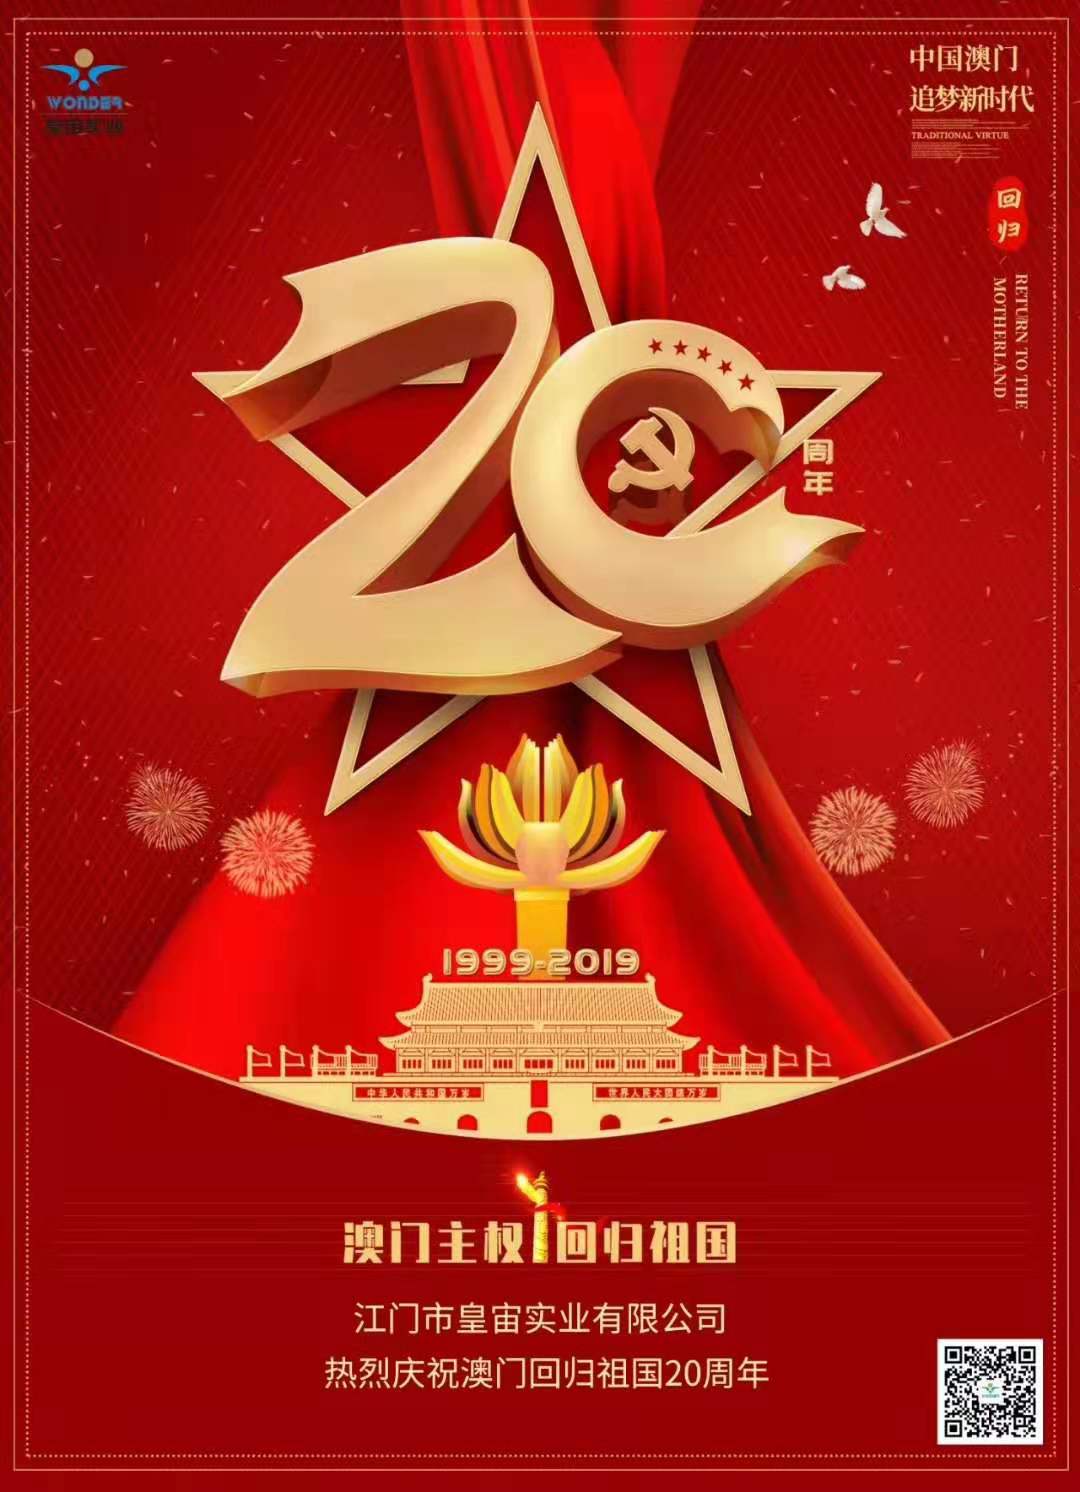 Wonder warmly celebrates the 20th anniversary of Macau.